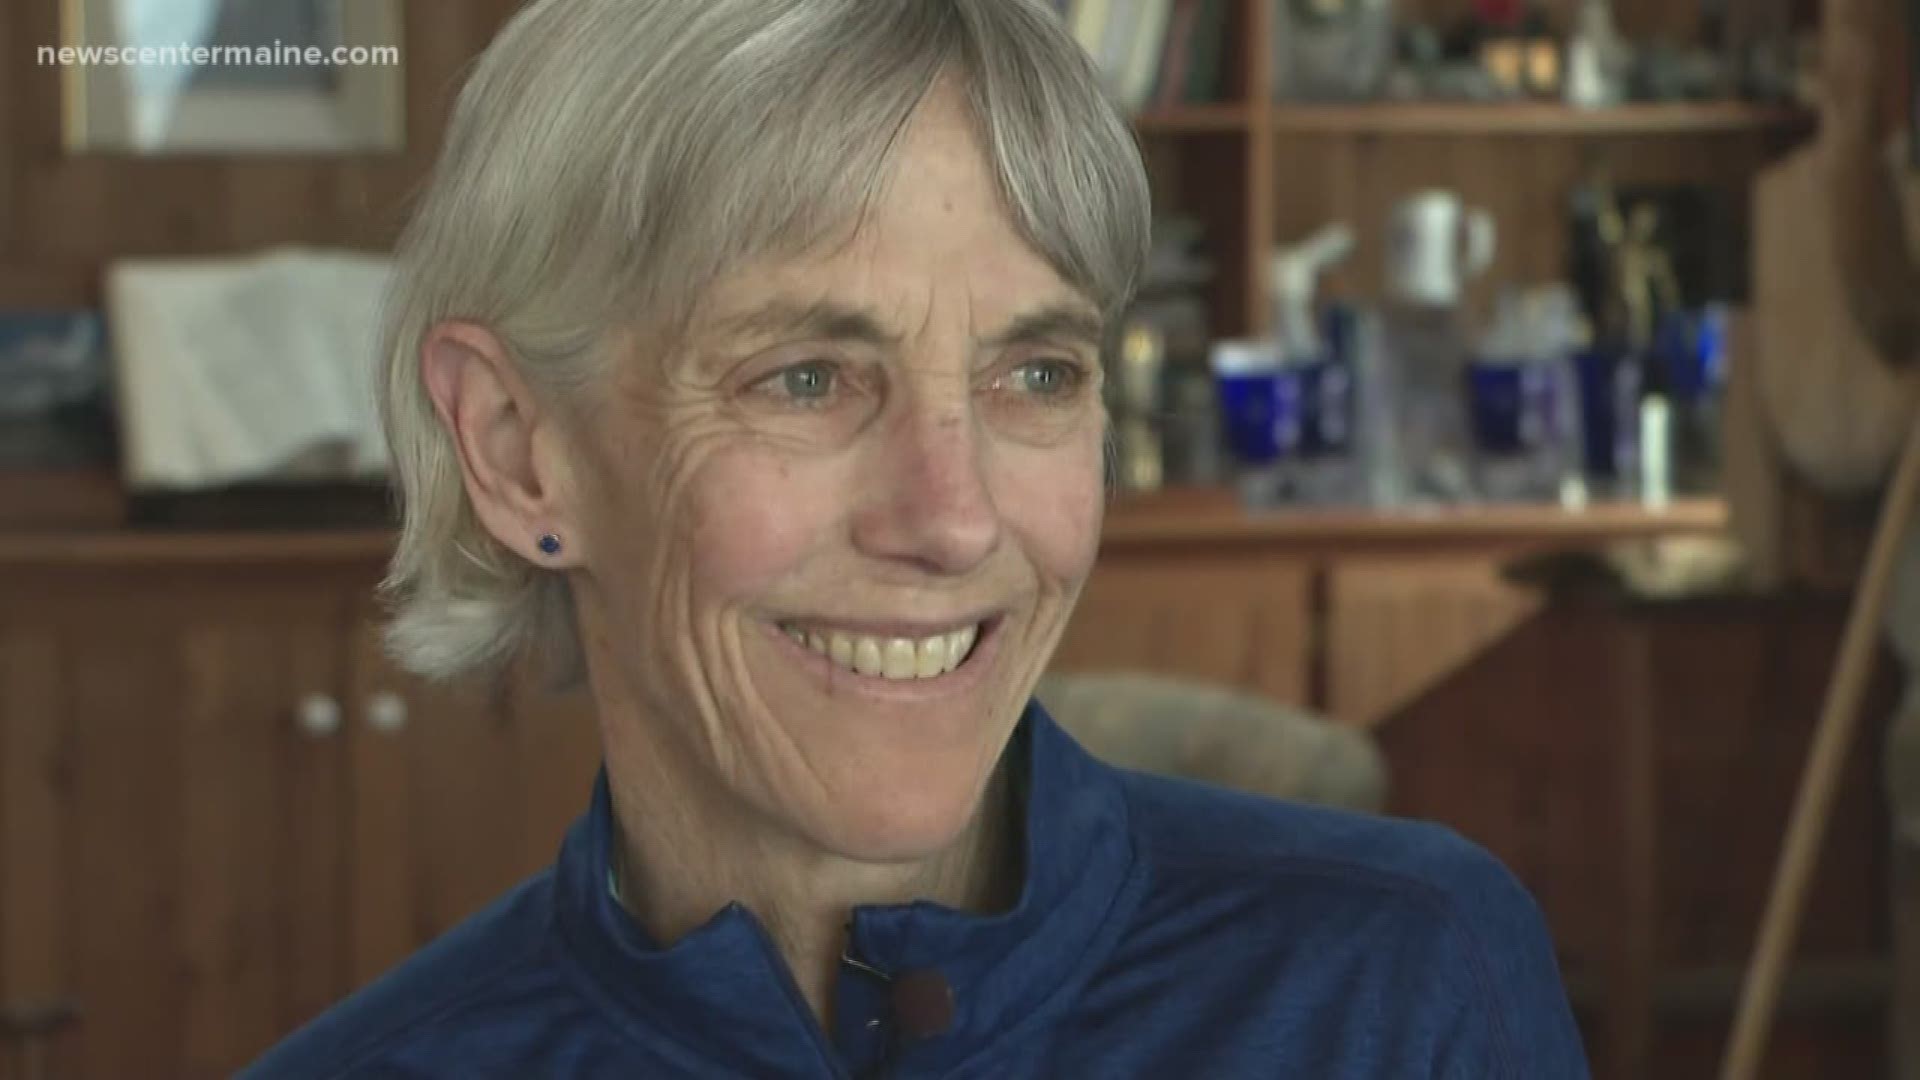 This year's Boston Marathon may be Joan Benoit Samuelson's last